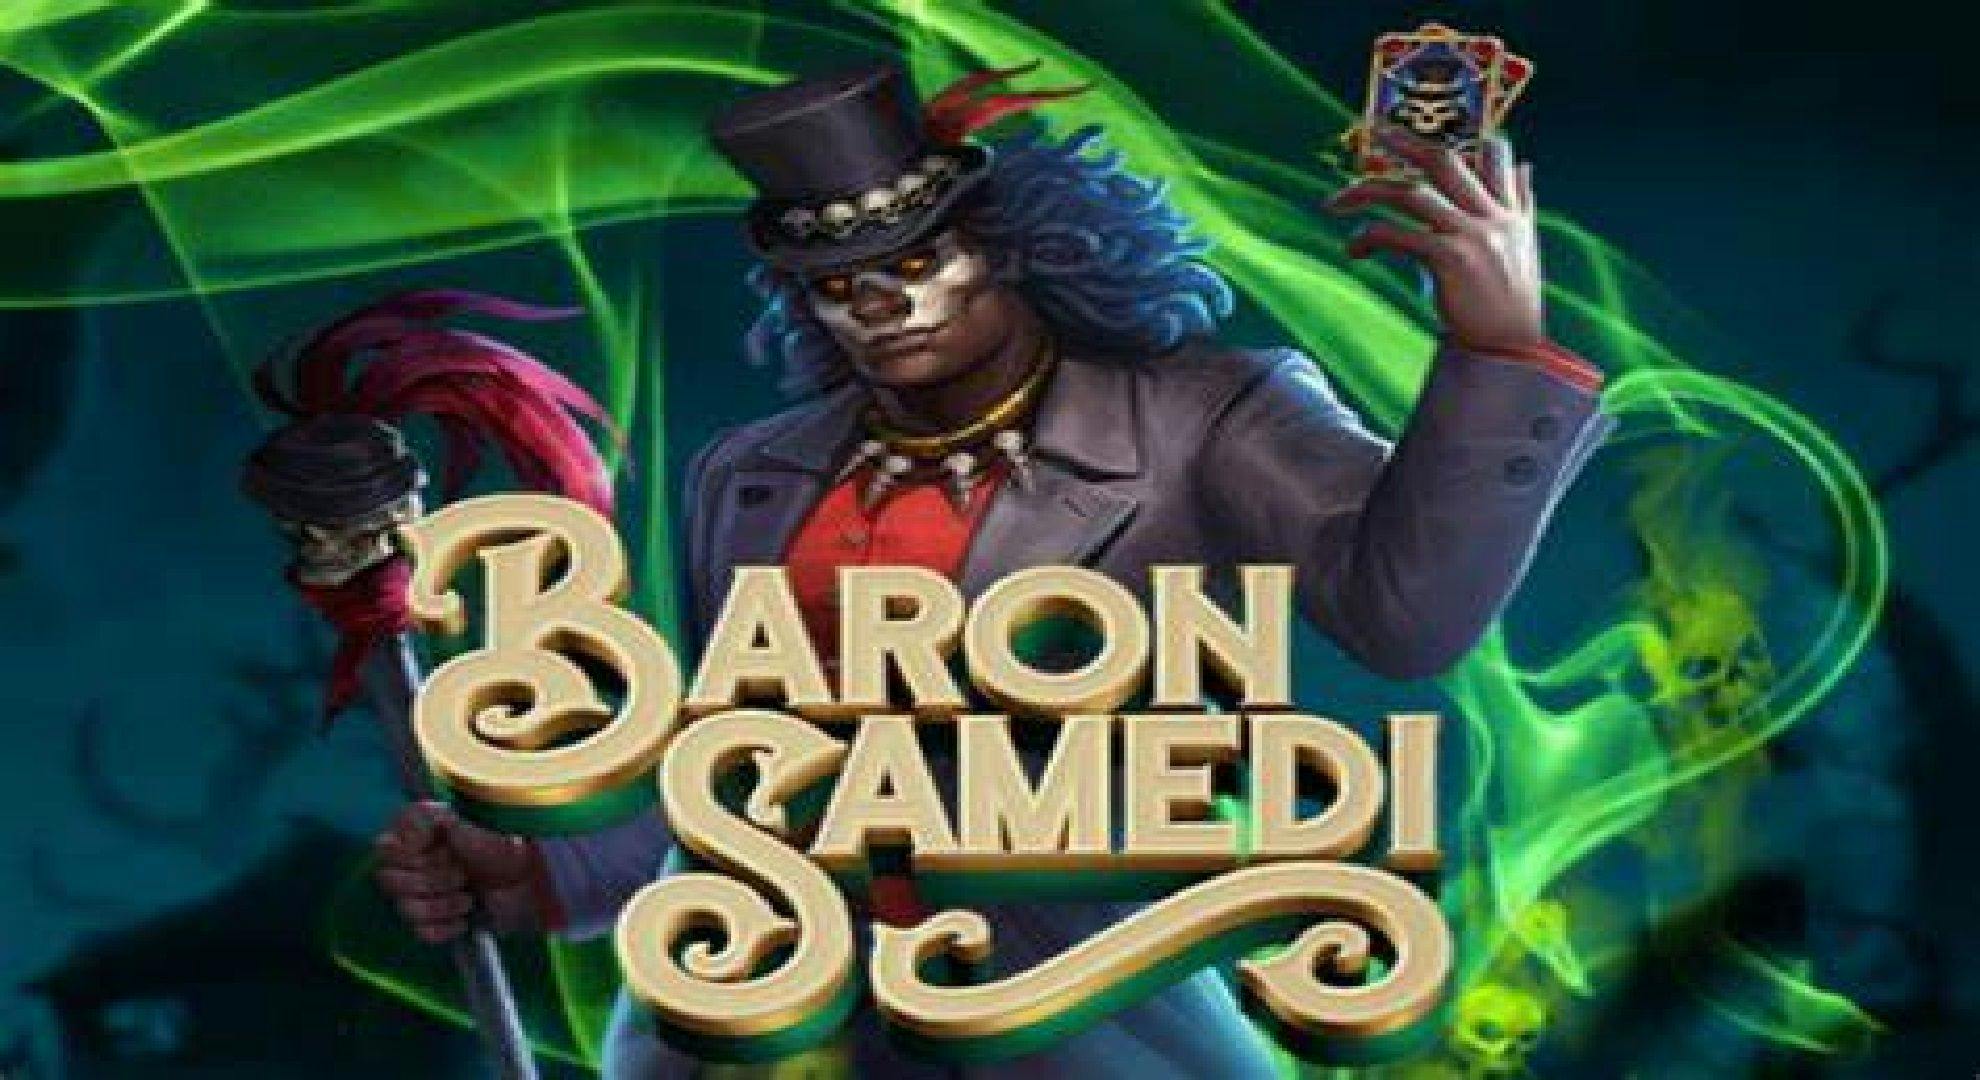 Baron Samedi Slot Online Free Play